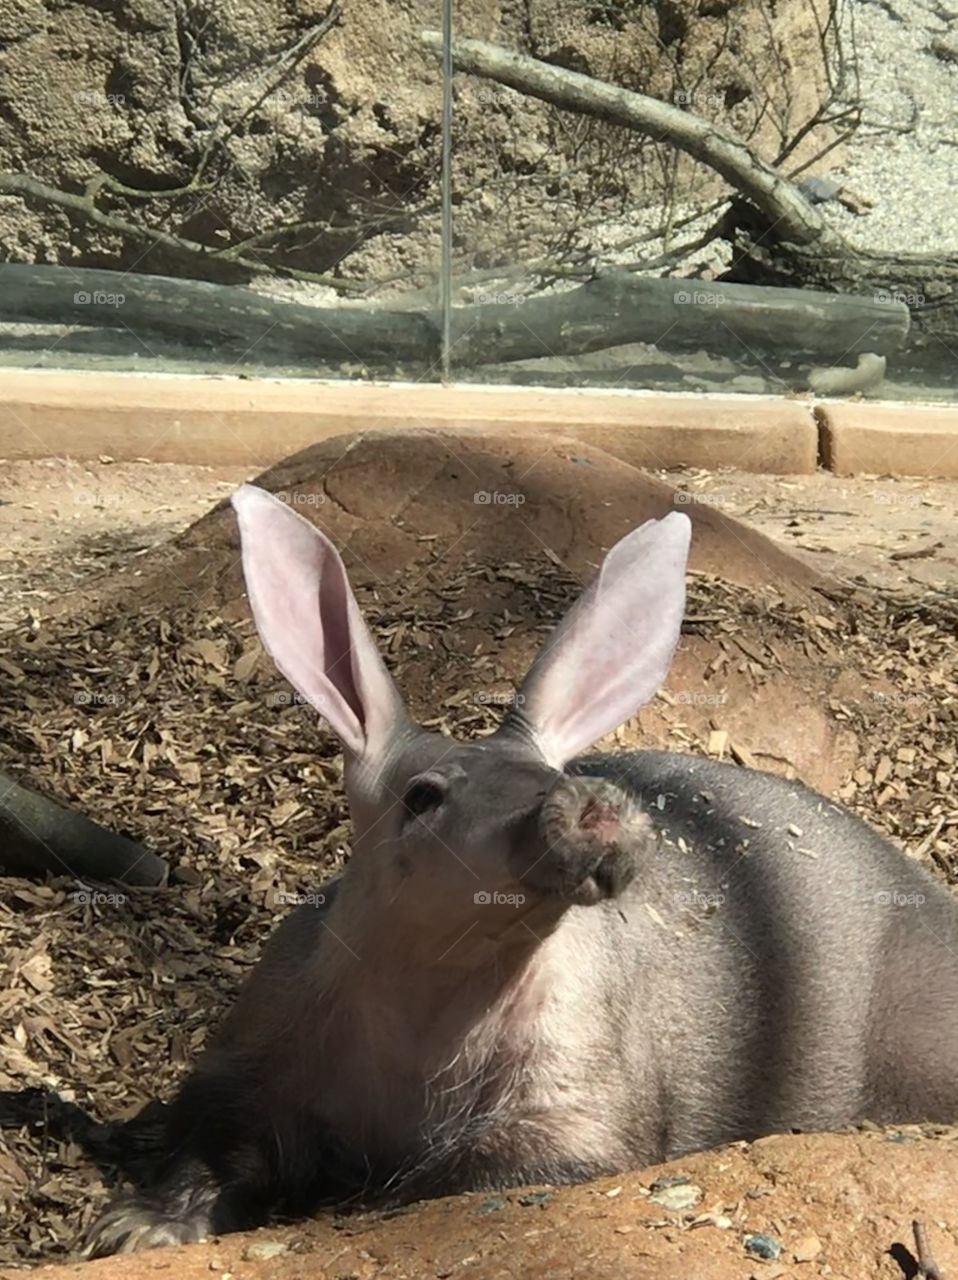 PUCKER UP BABY!  The rat-rabbit-kangaroo is feeling frisky and wants a kiss!! 💋👁